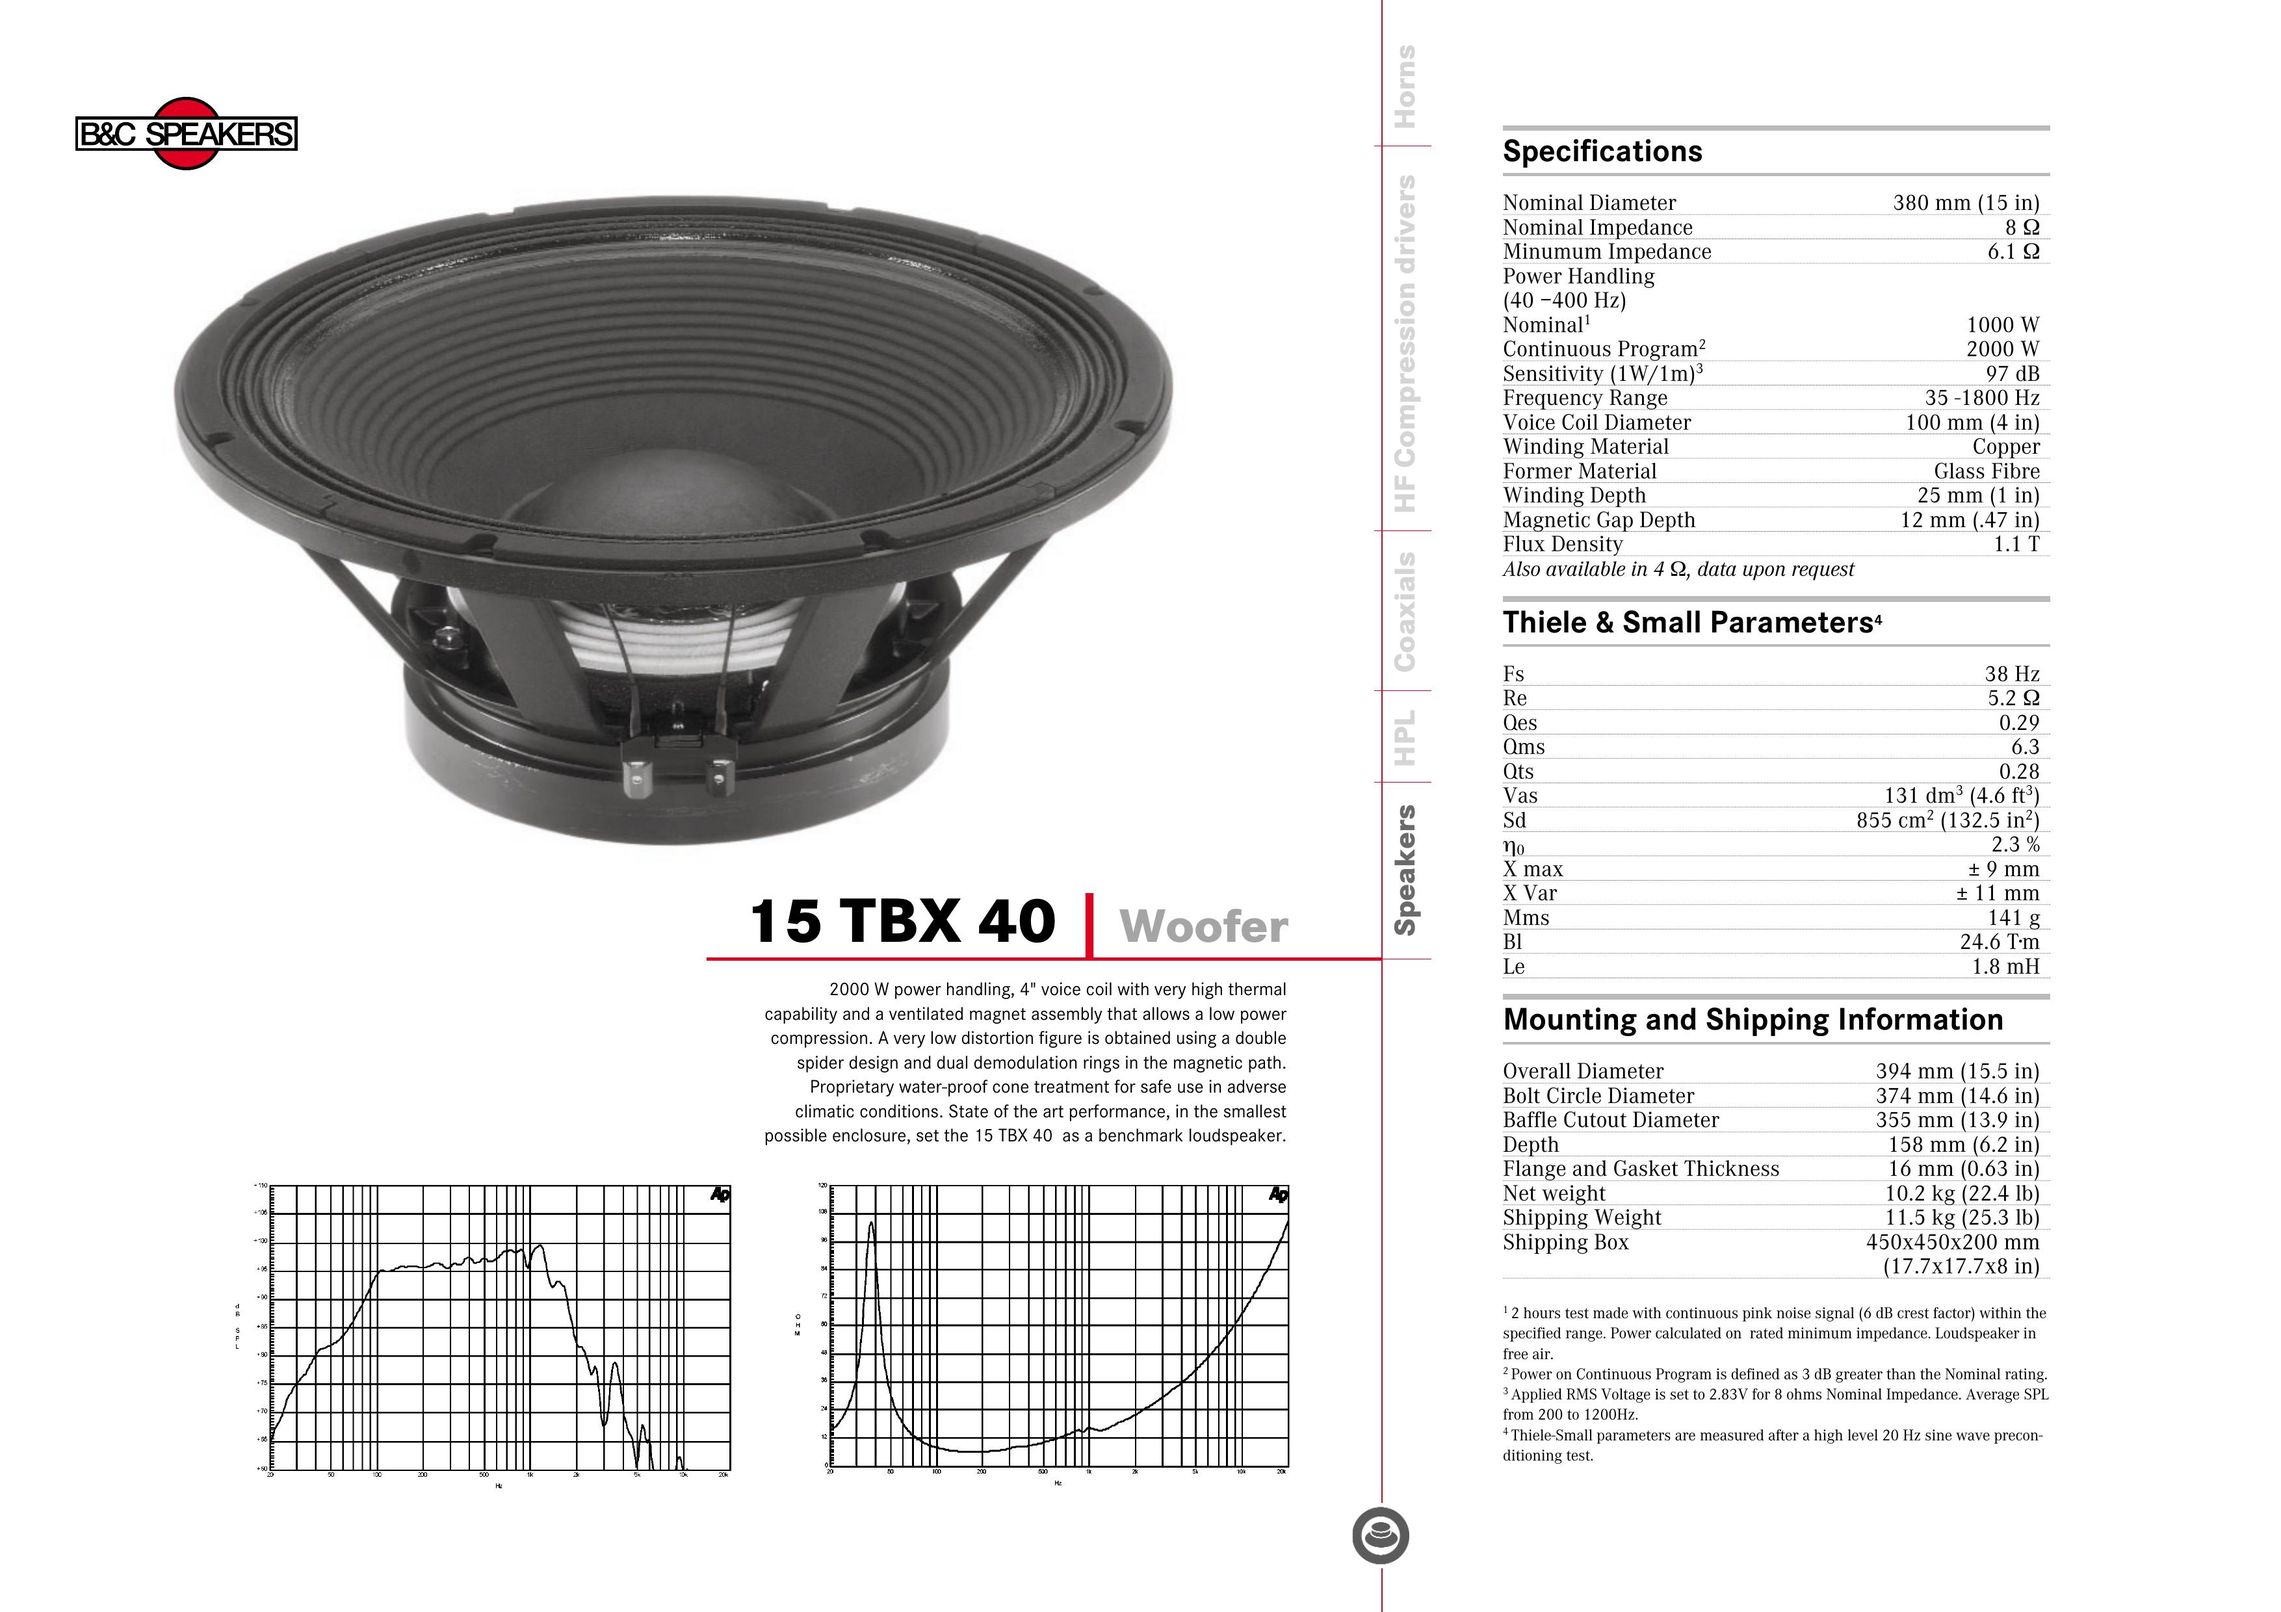 B&C Speakers 15 TBX 40 Speaker User Manual